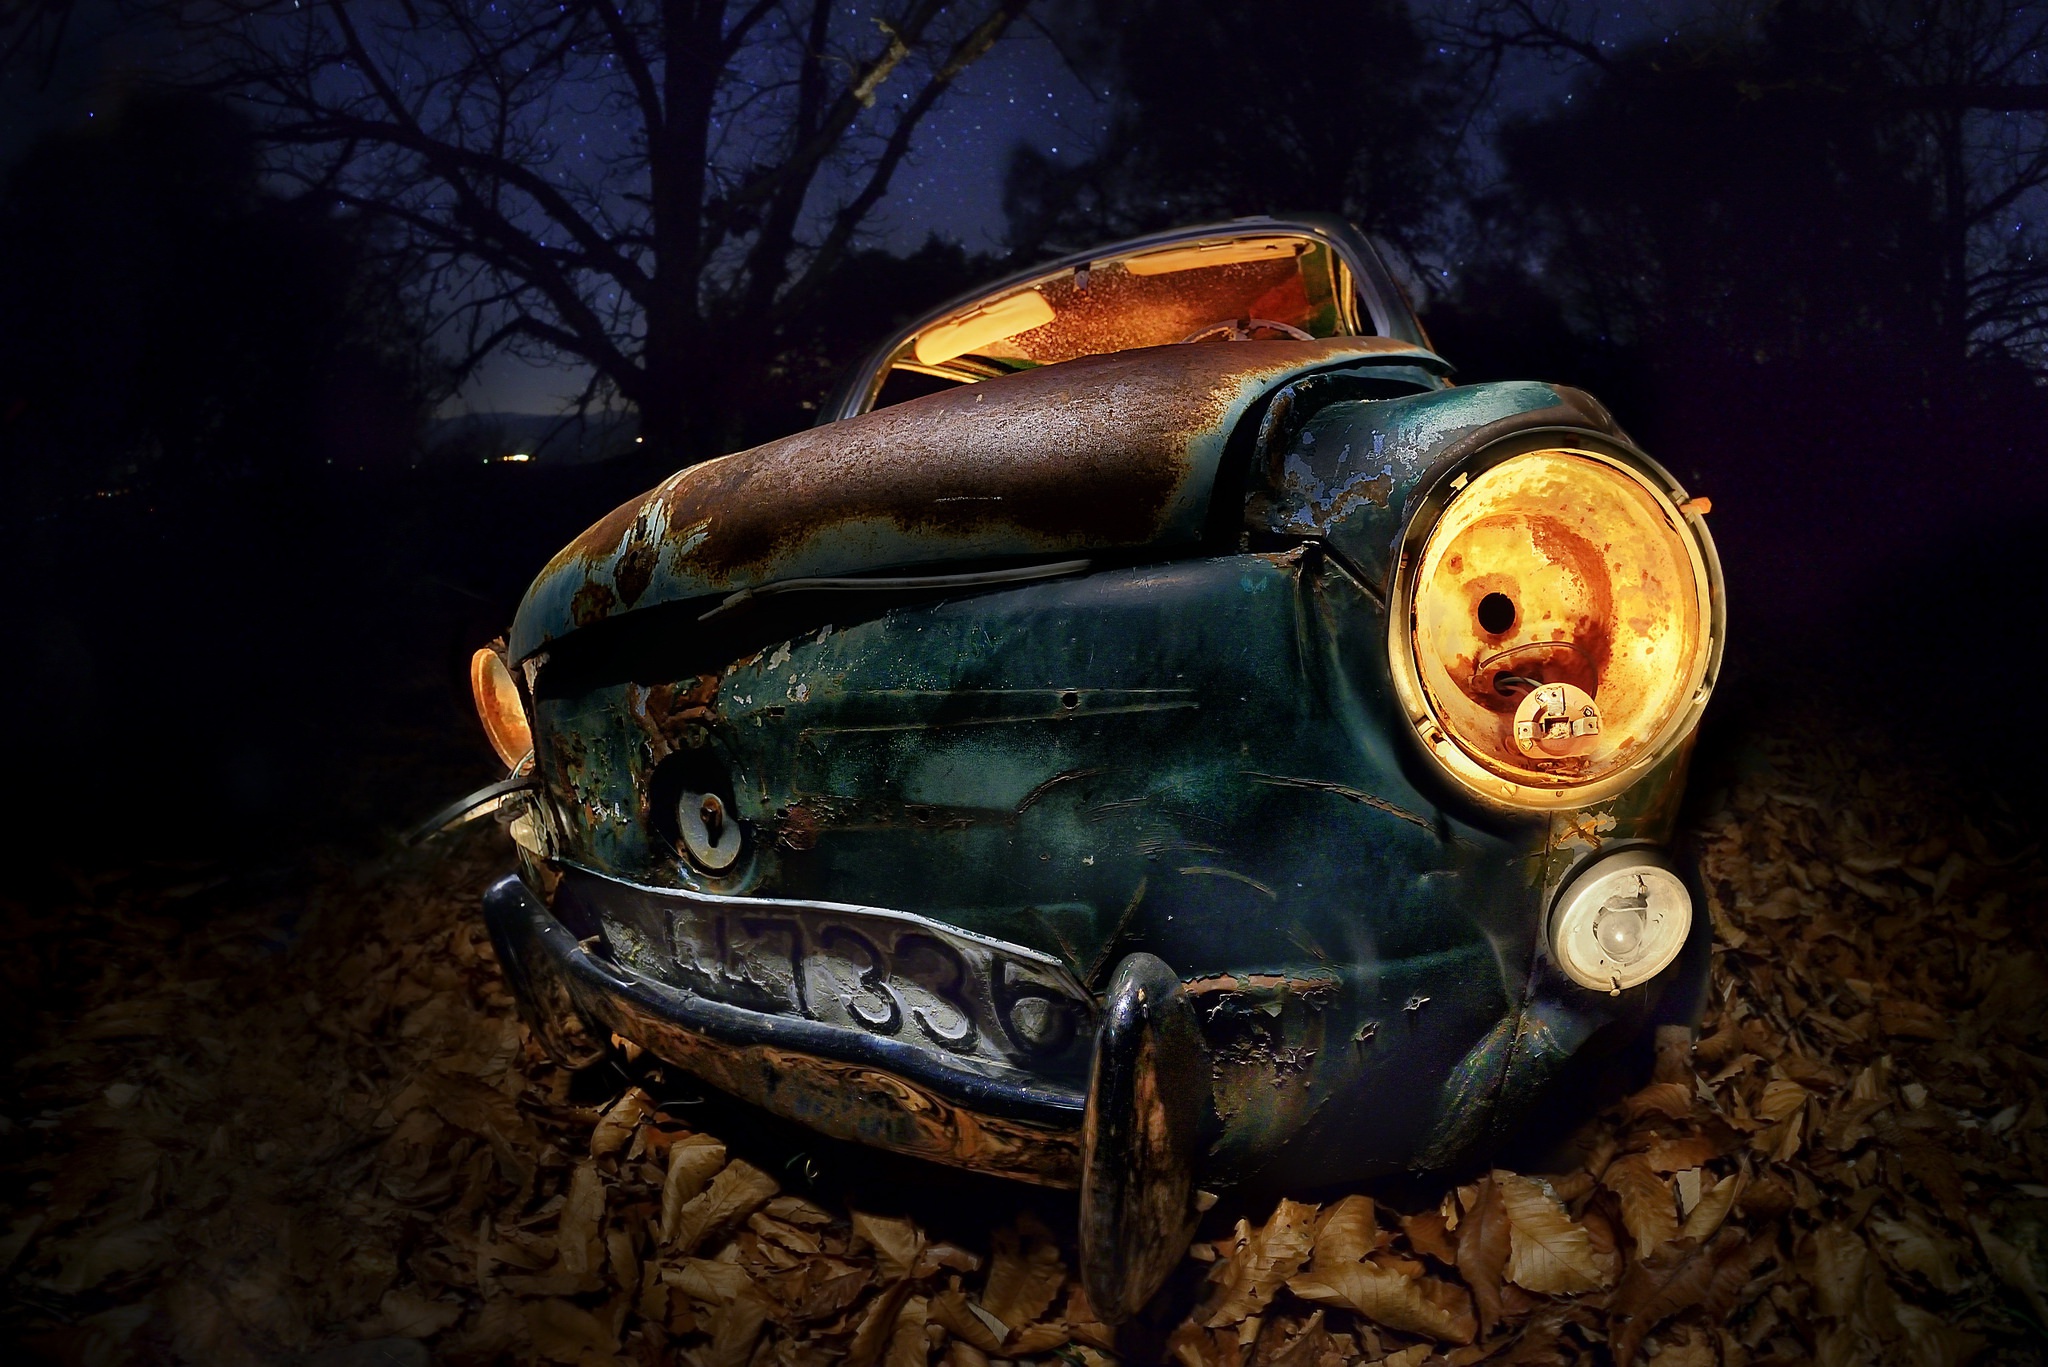 General 2048x1367 vehicle car dark wreck rust night fallen leaves old car fall